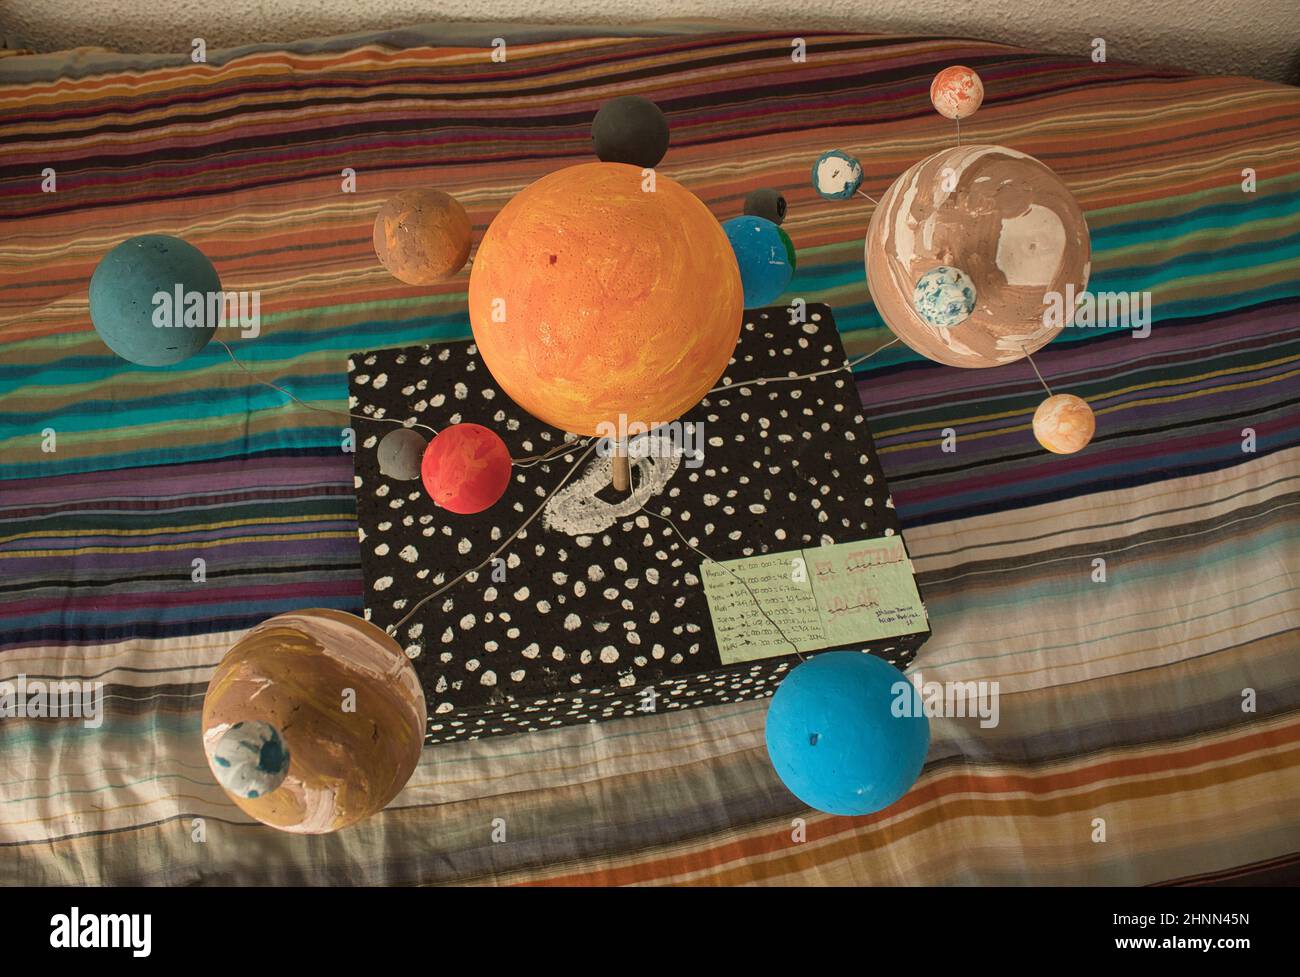 Scale Model Solar System resources for informal educators